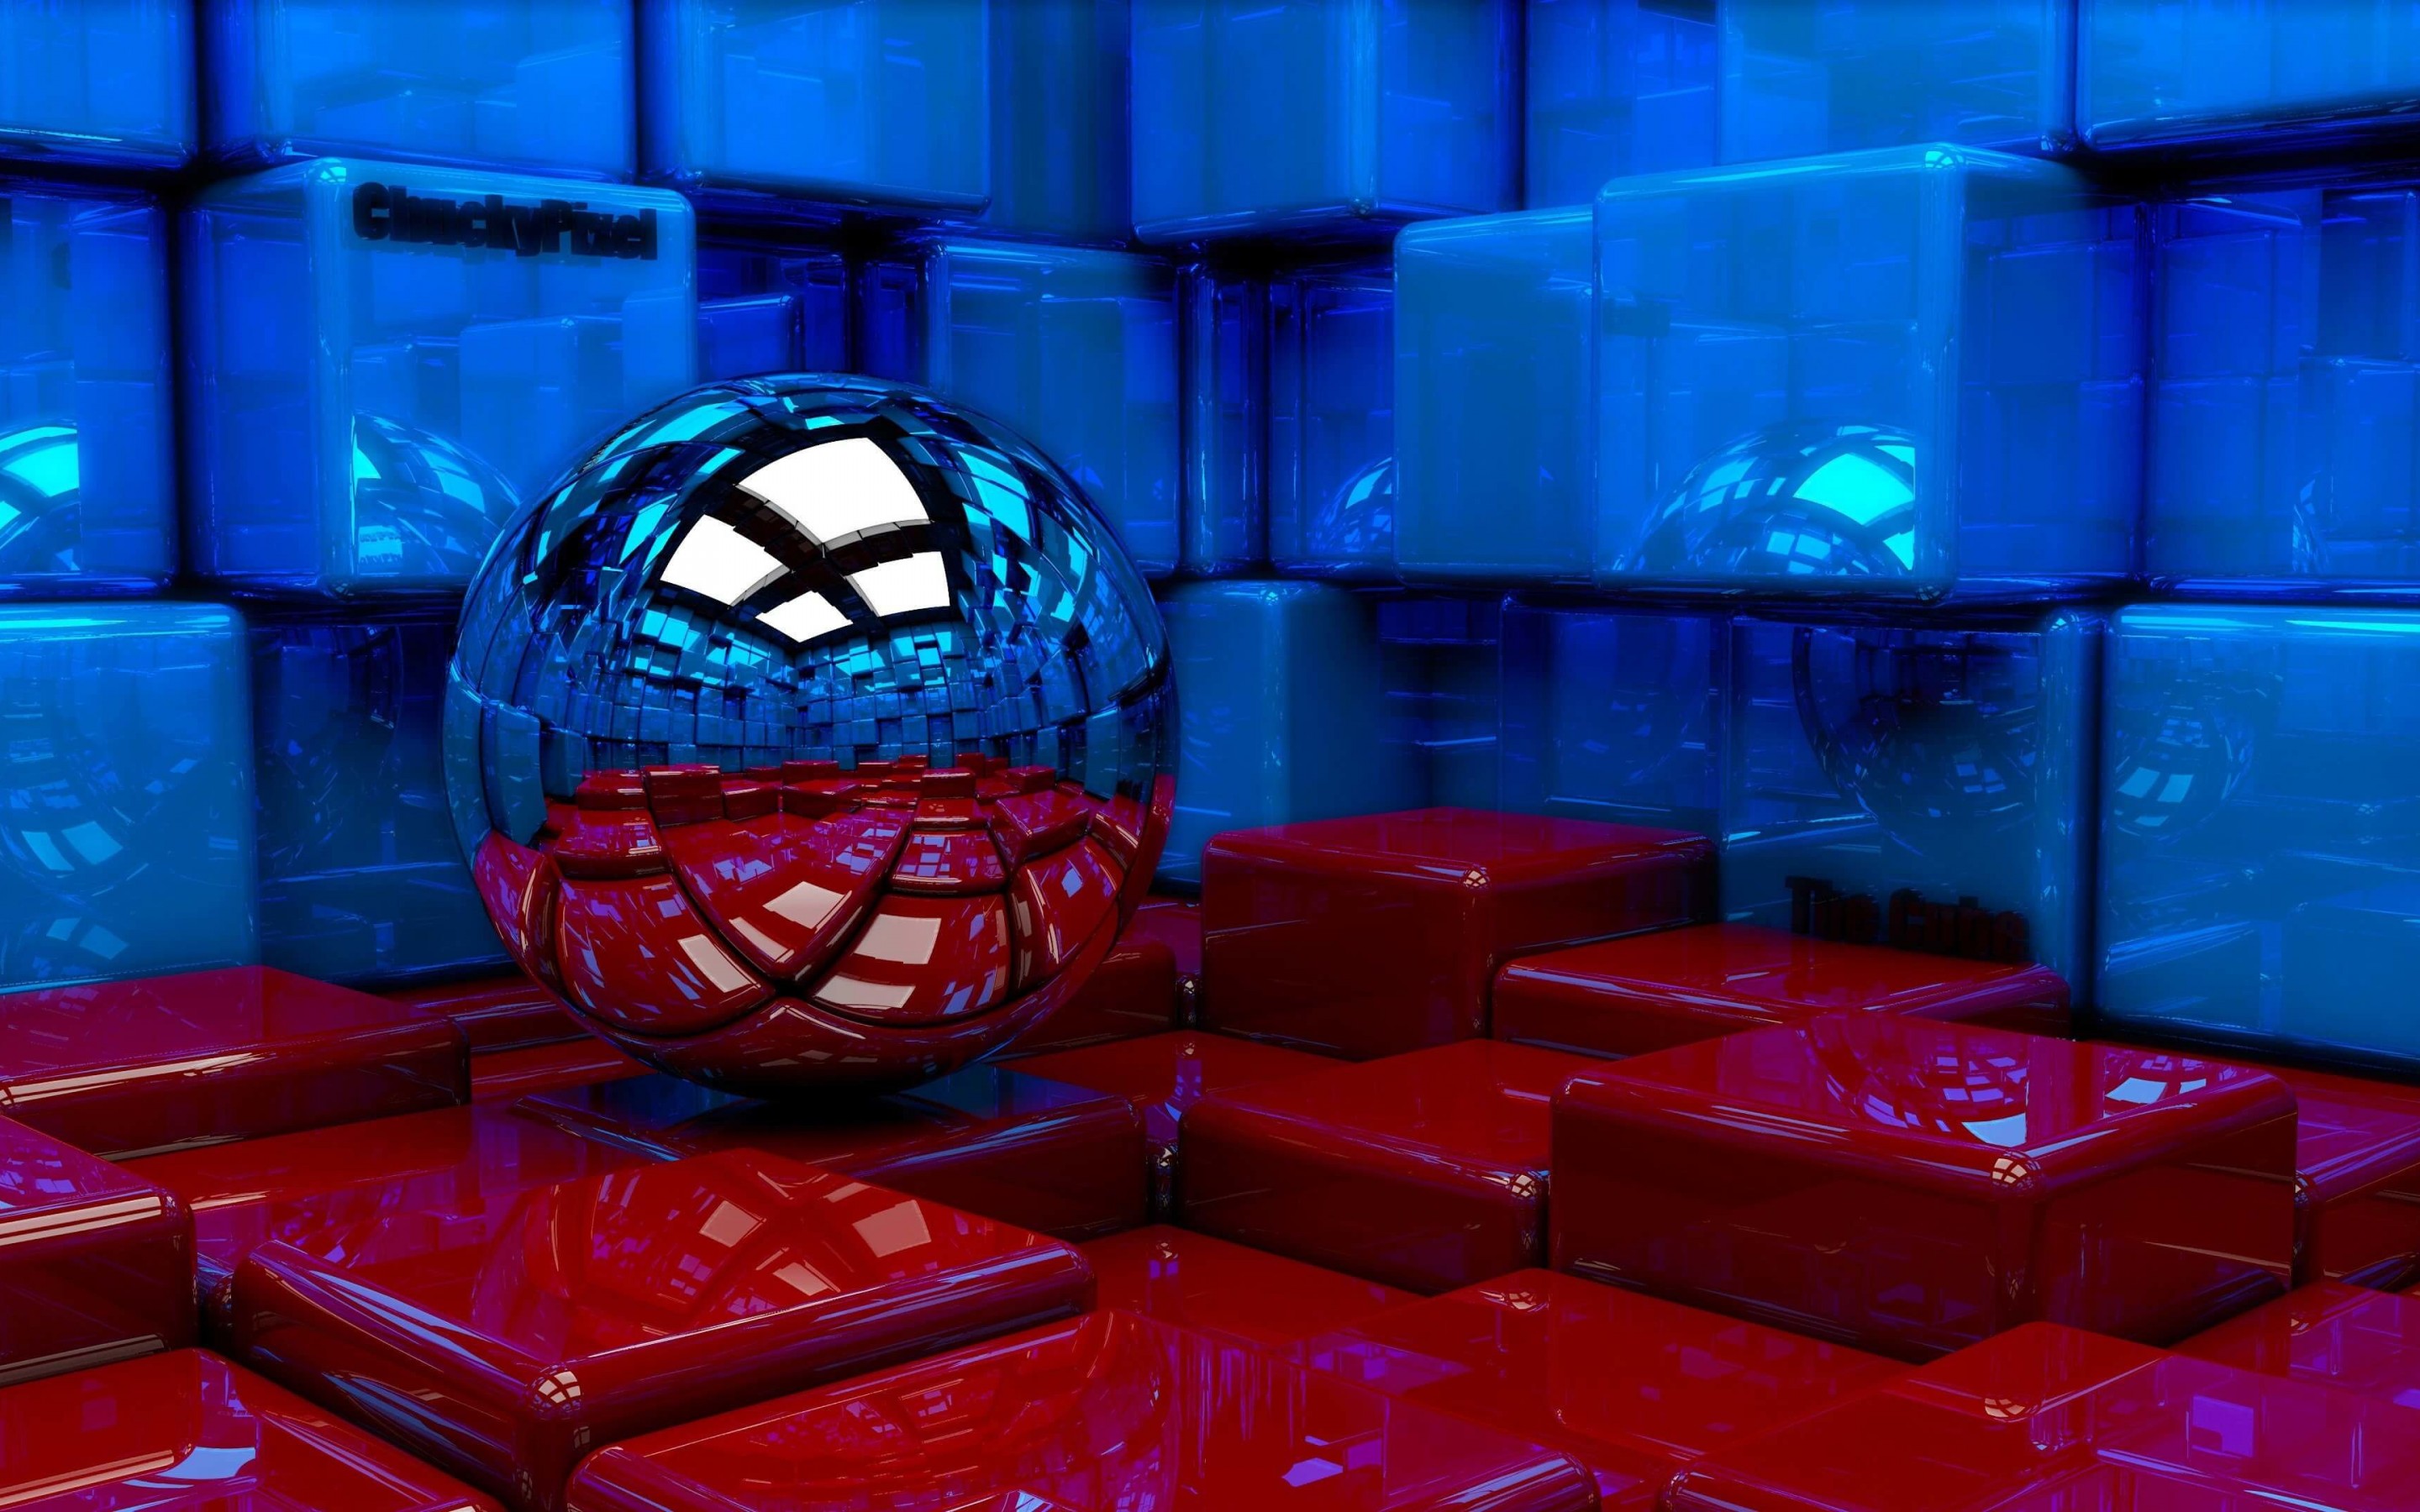 Metallic Sphere Reflecting The Cube Room Wallpaper for Desktop 2880x1800